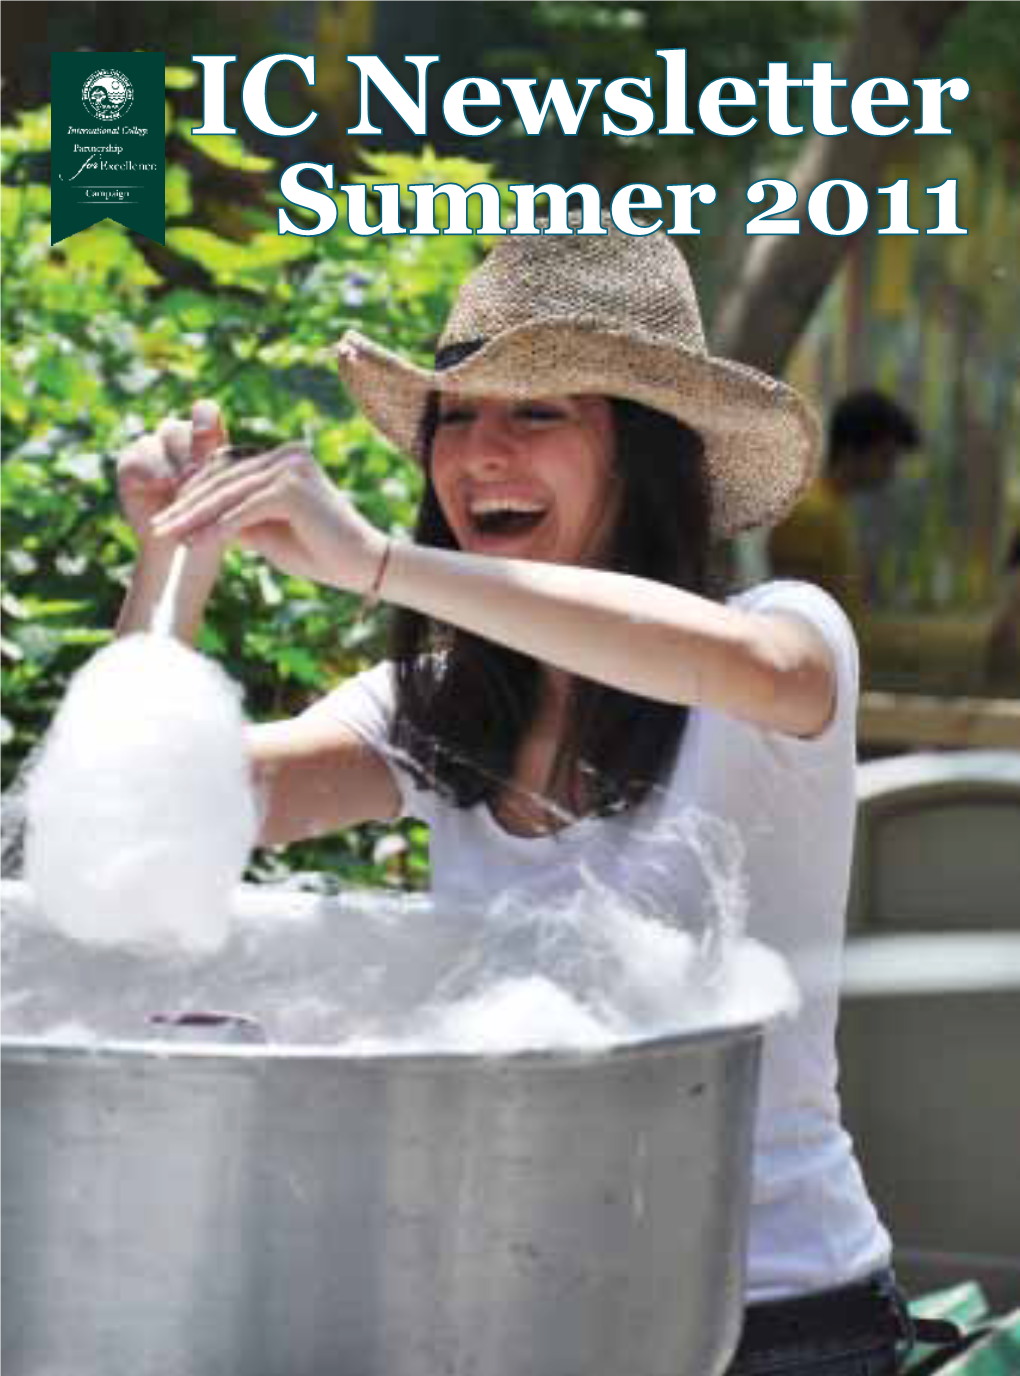 SUMMER 2011 1 IC Newsletter Summer 2011 2 SUMMER 2011 International College